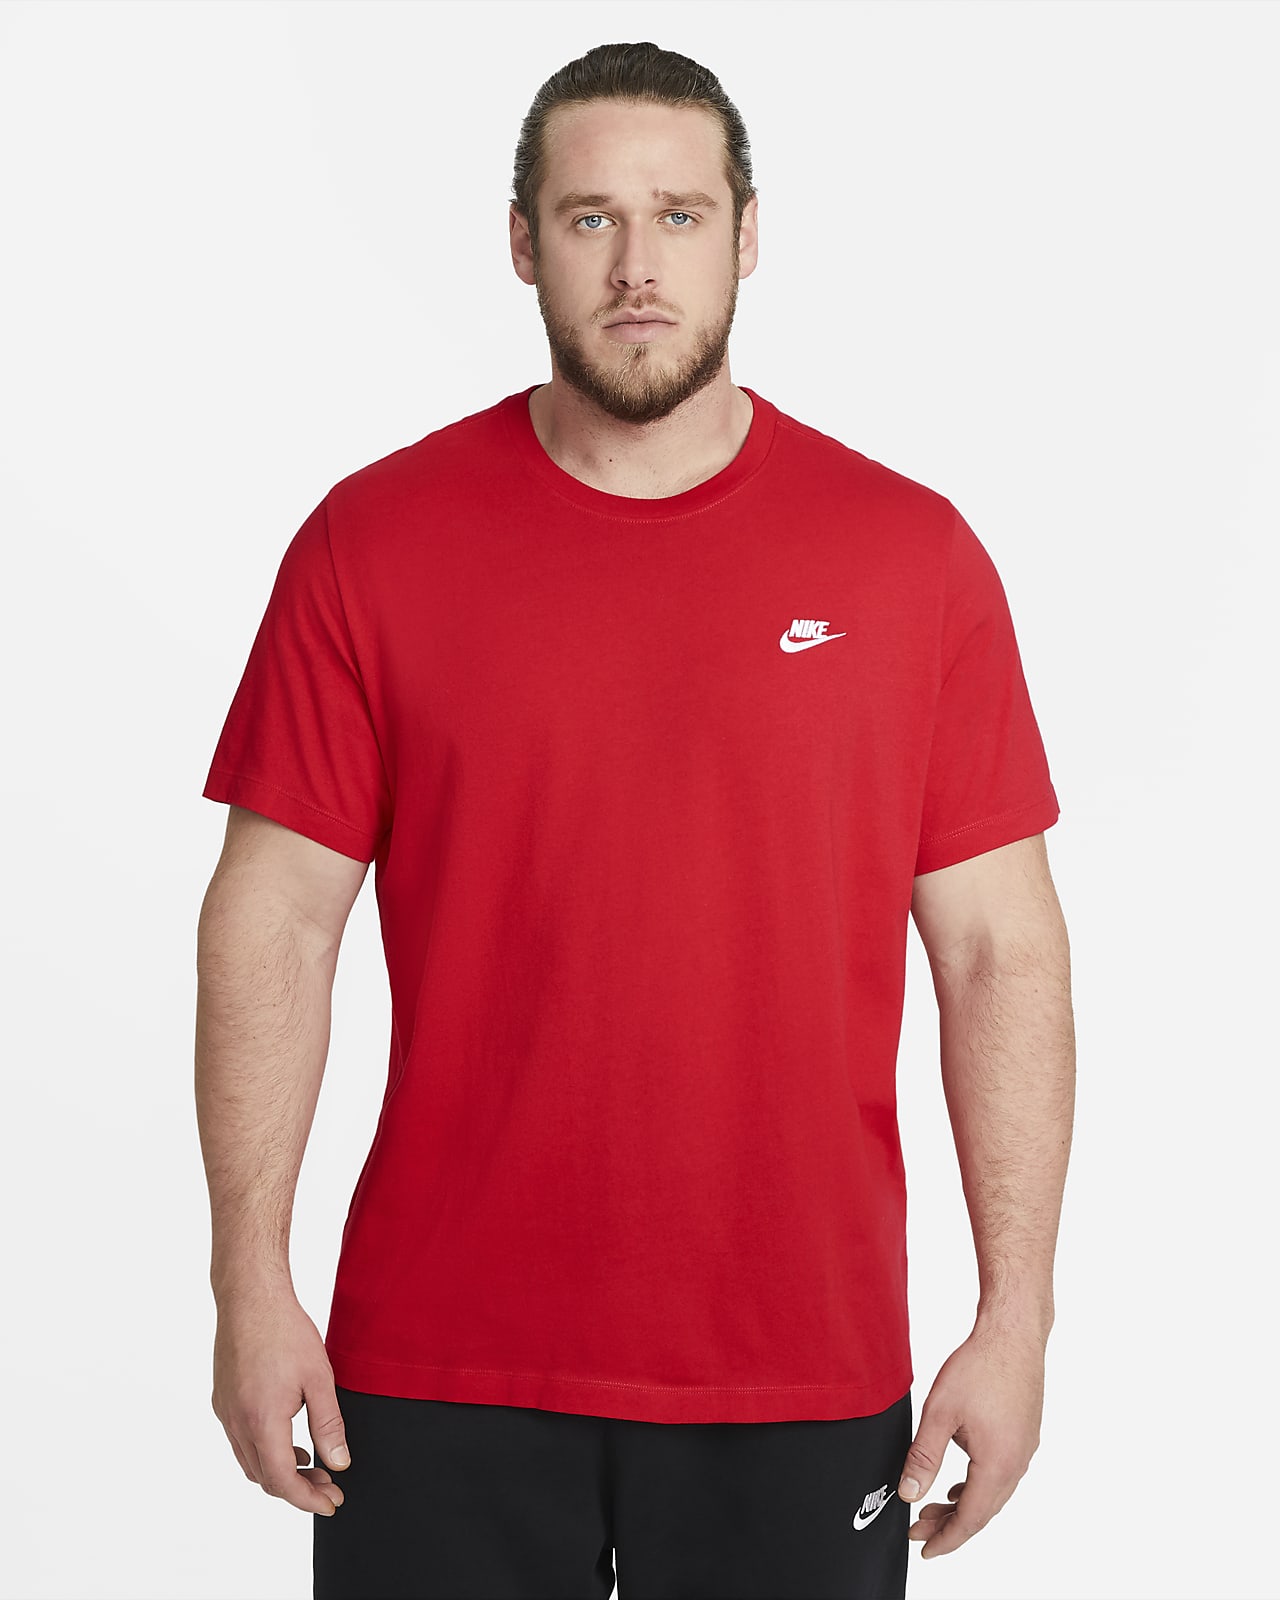 Nike Sportswear Men's T-Shirt. LU